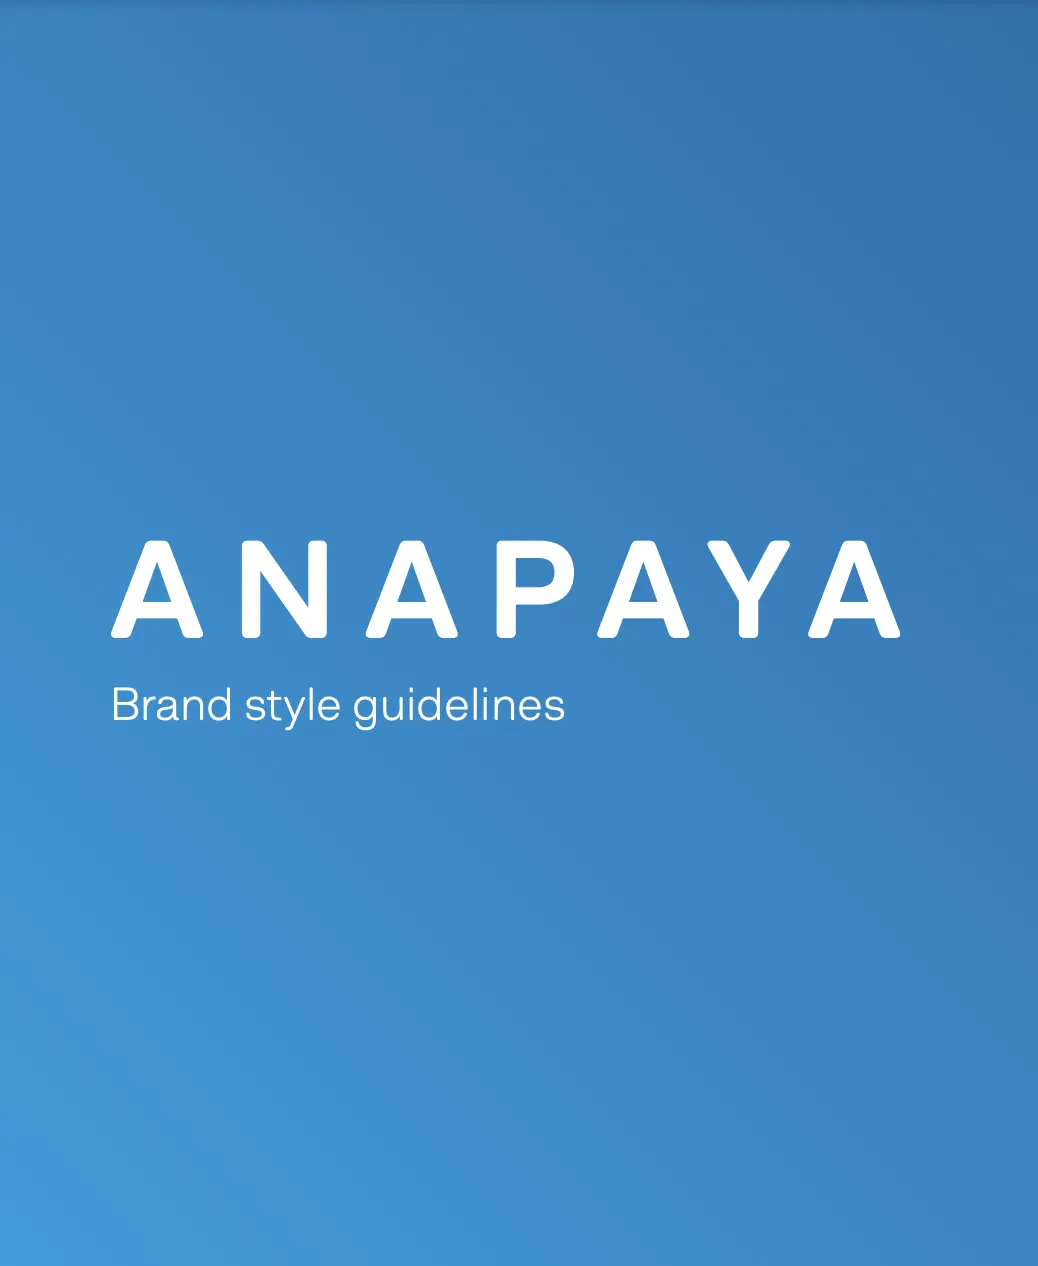 Anapaya brand style guidelines